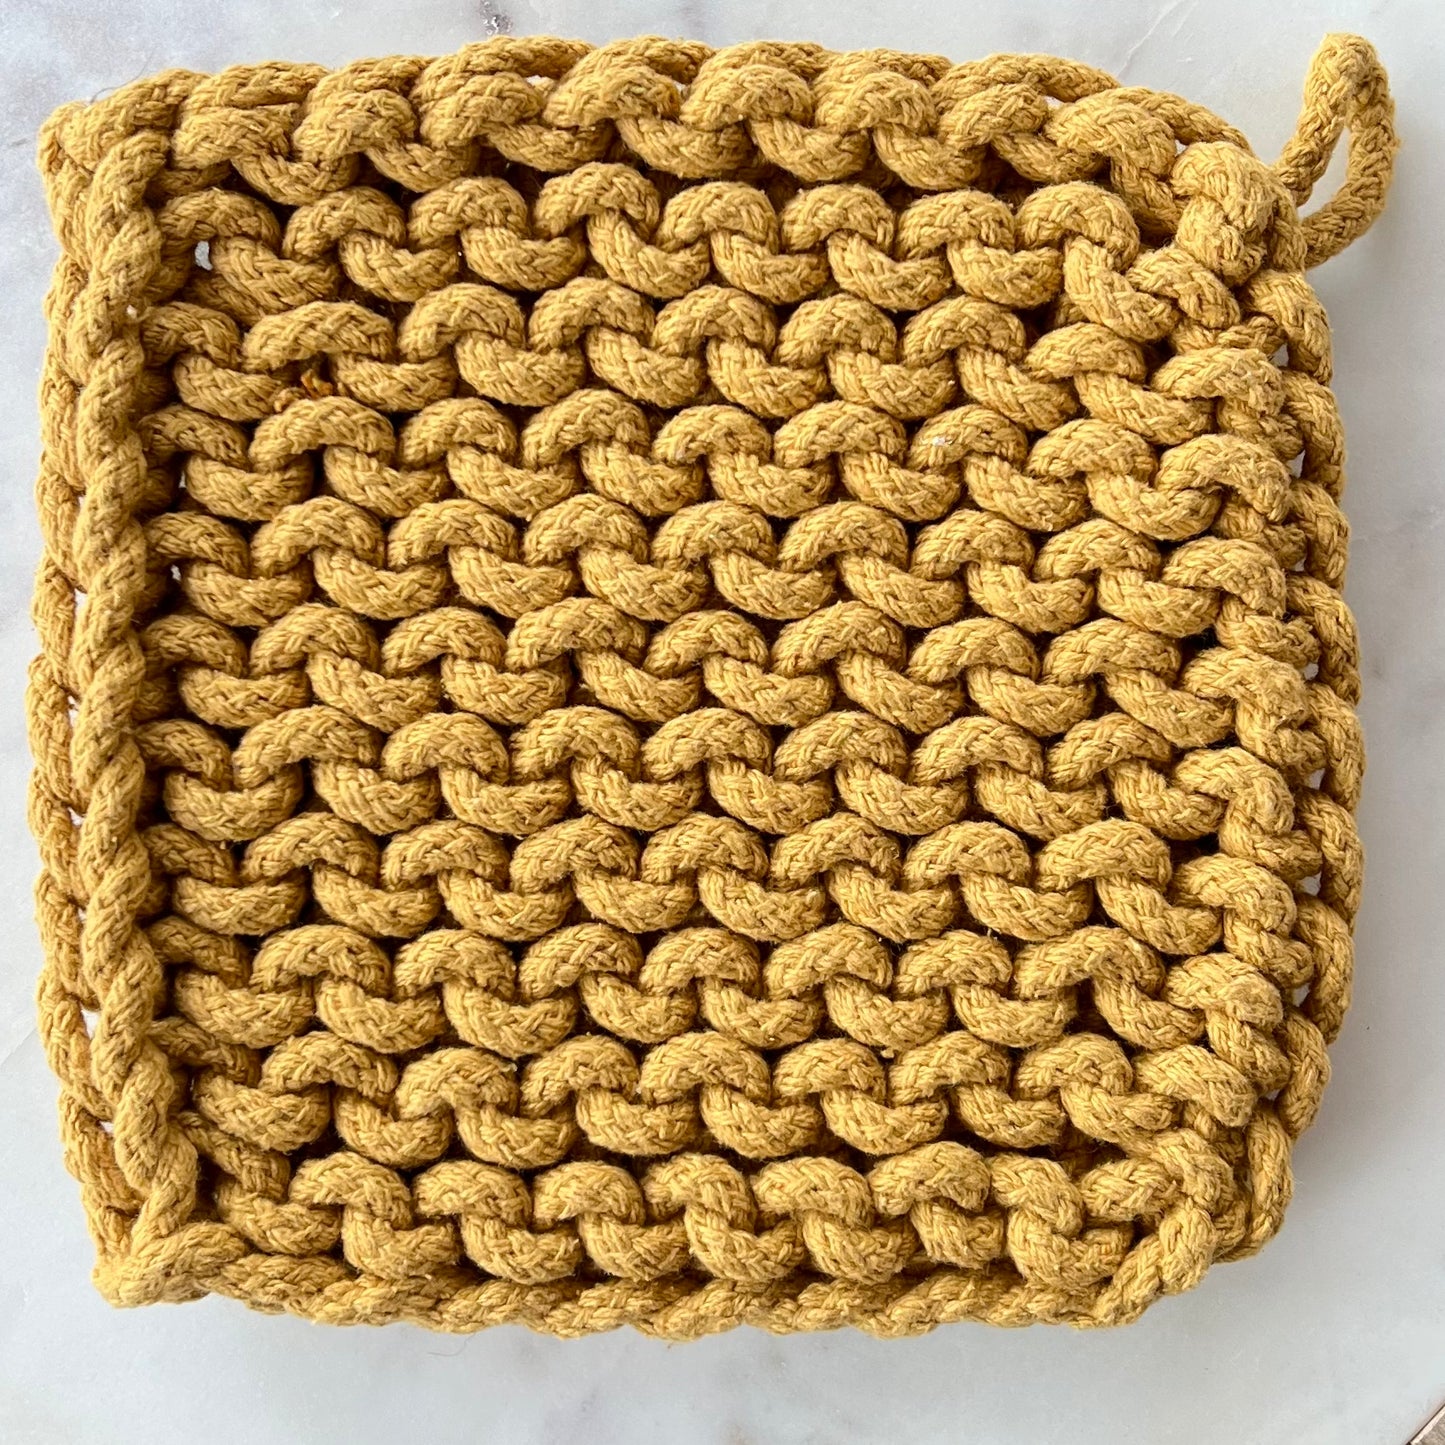 Cotton Crocheted Pot-Holders